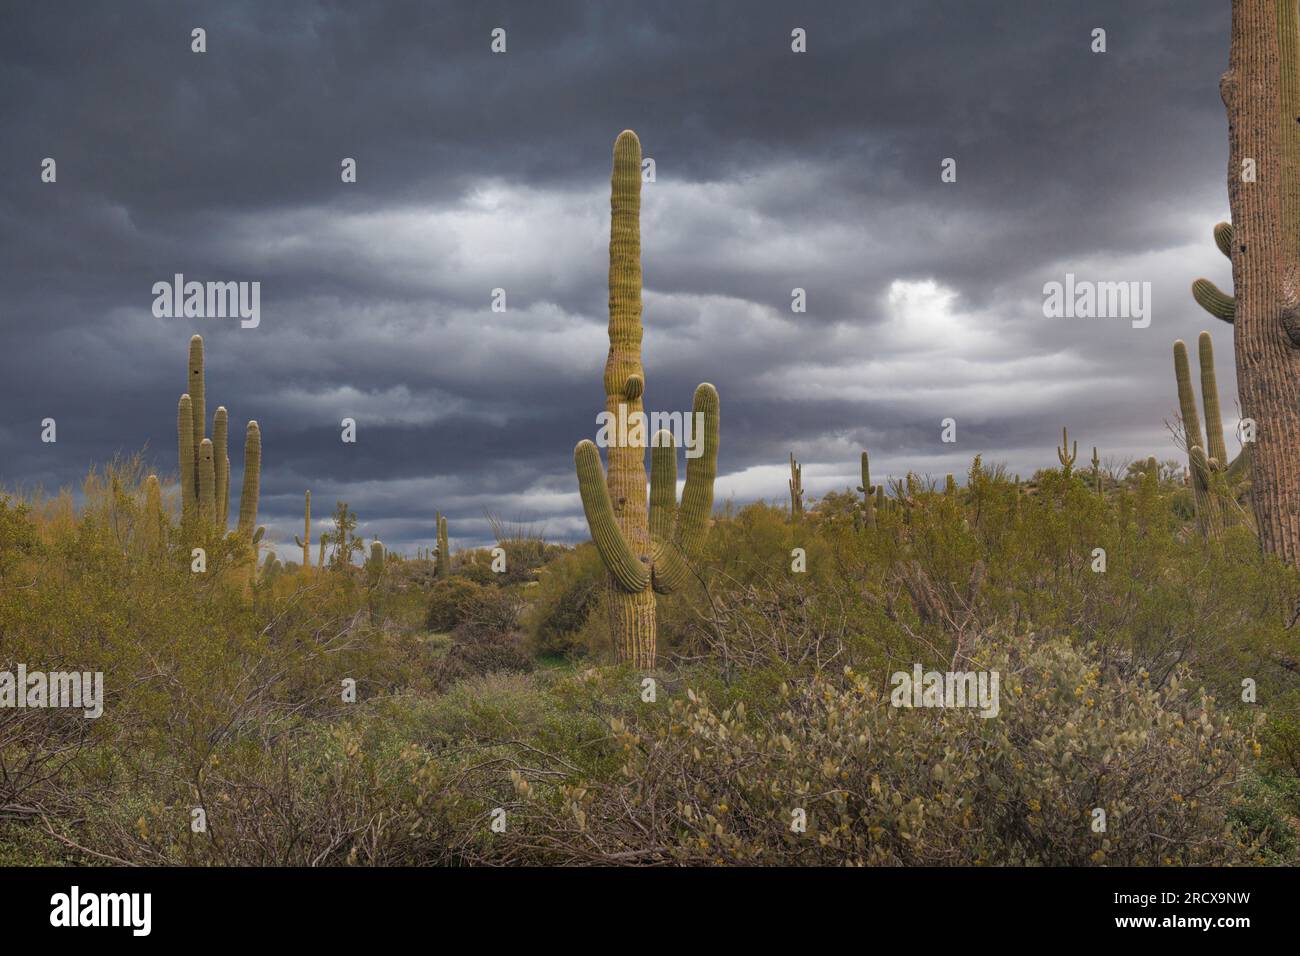 Cactus di saguaro (Carnegiea gigantea, Cereus giganteus), numerosi cactus di saguaro di fronte ad un fronte temporale in avvicinamento, USA, Arizona, Browns Foto Stock